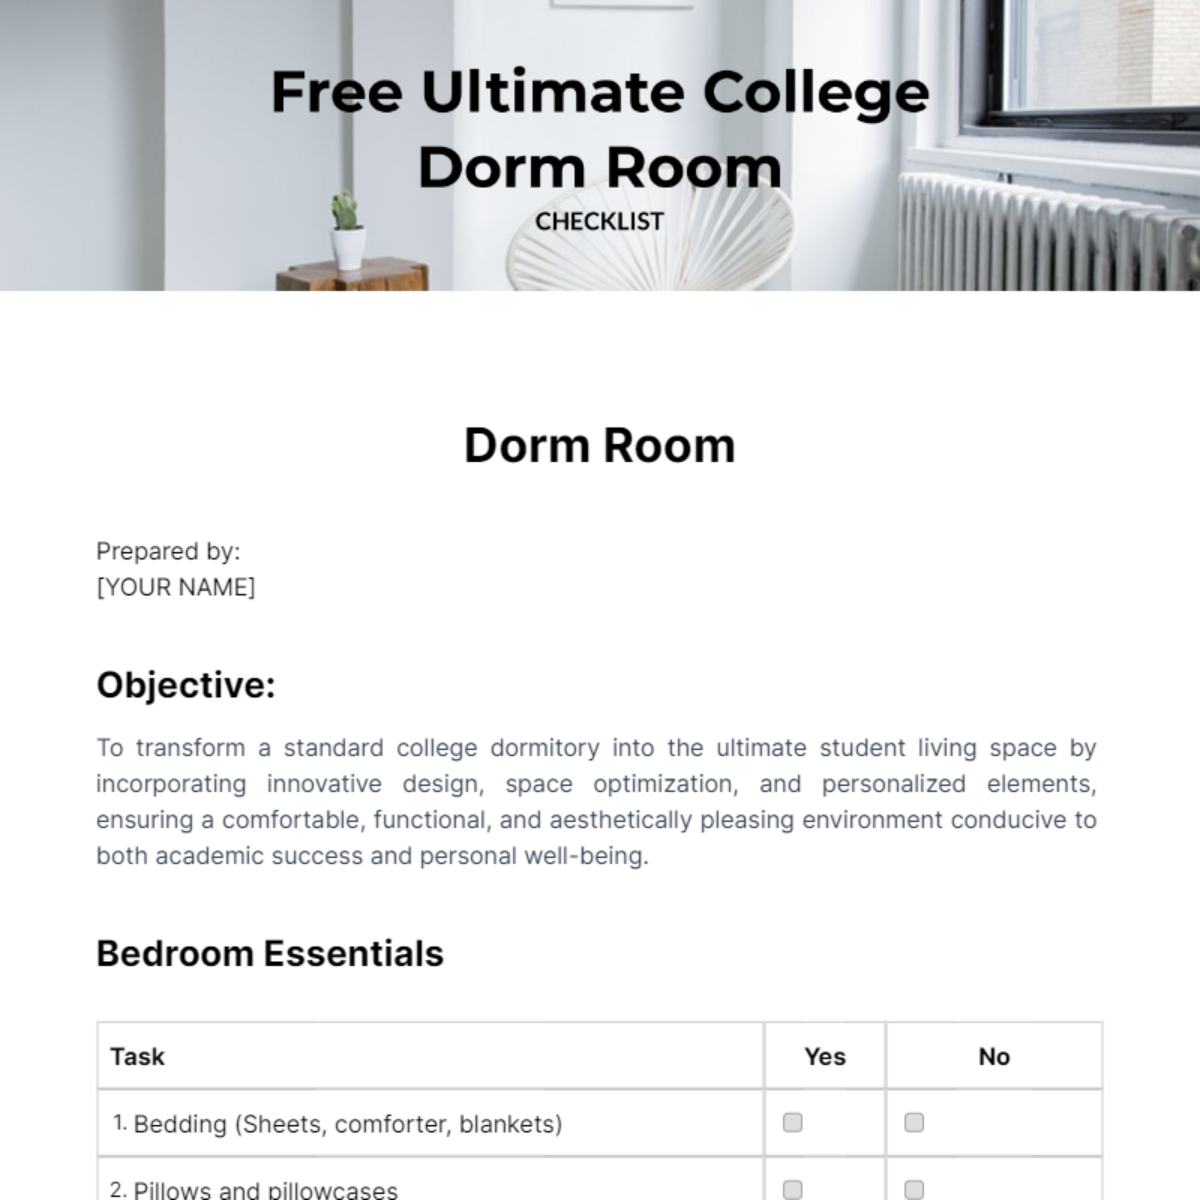 Free Ultimate College Dorm Room Checklist Template